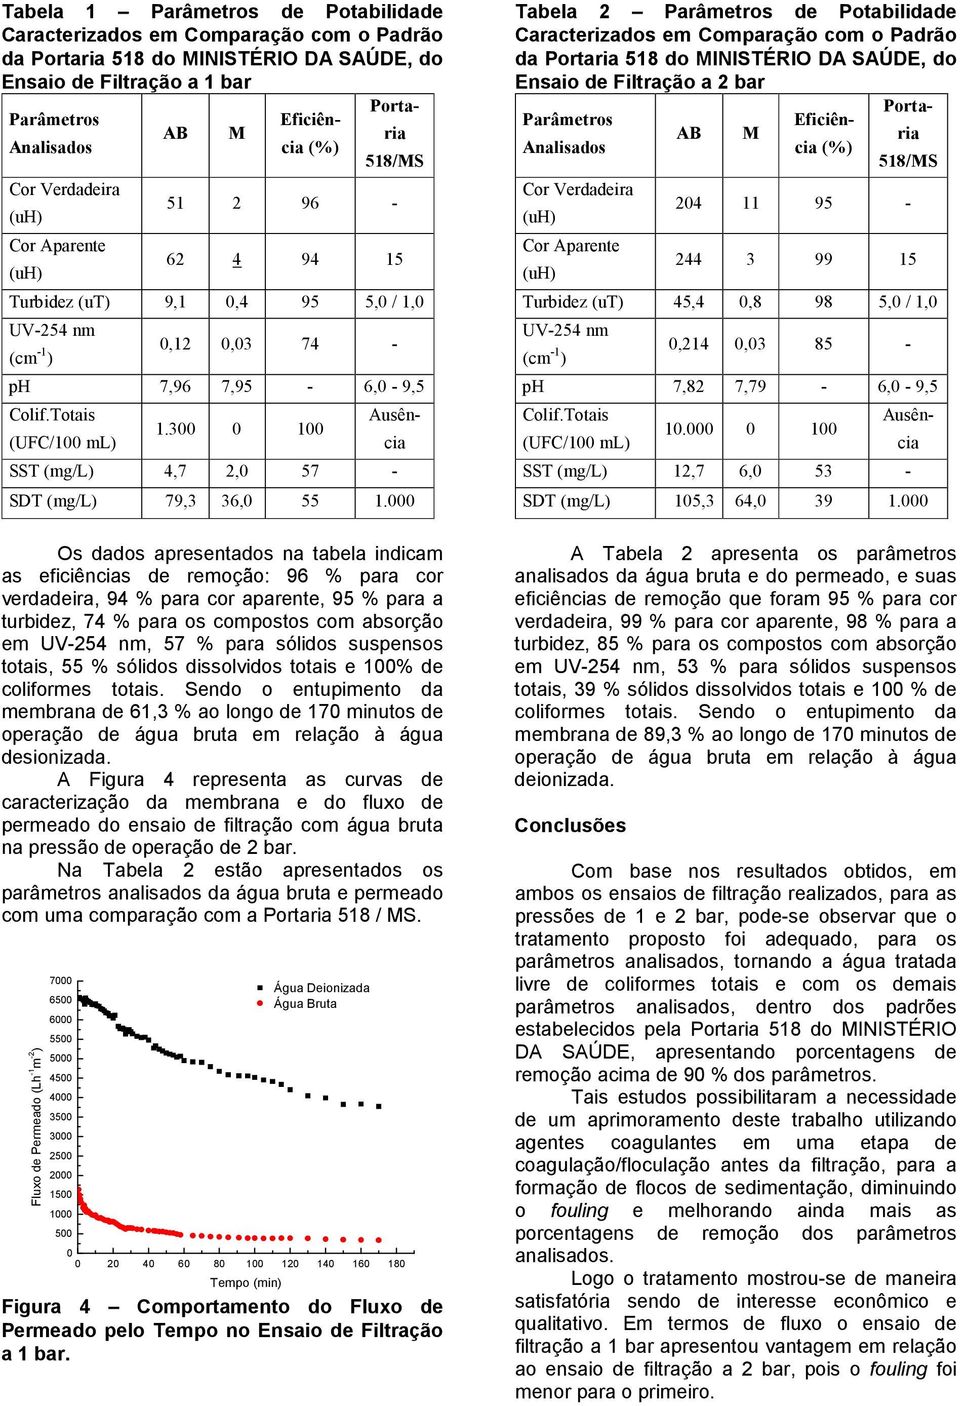 Parâmetros Eficiência (%) AB M Analisados 518/MS Ausência SDT (mg/l) 79,3 36,0 55 1.